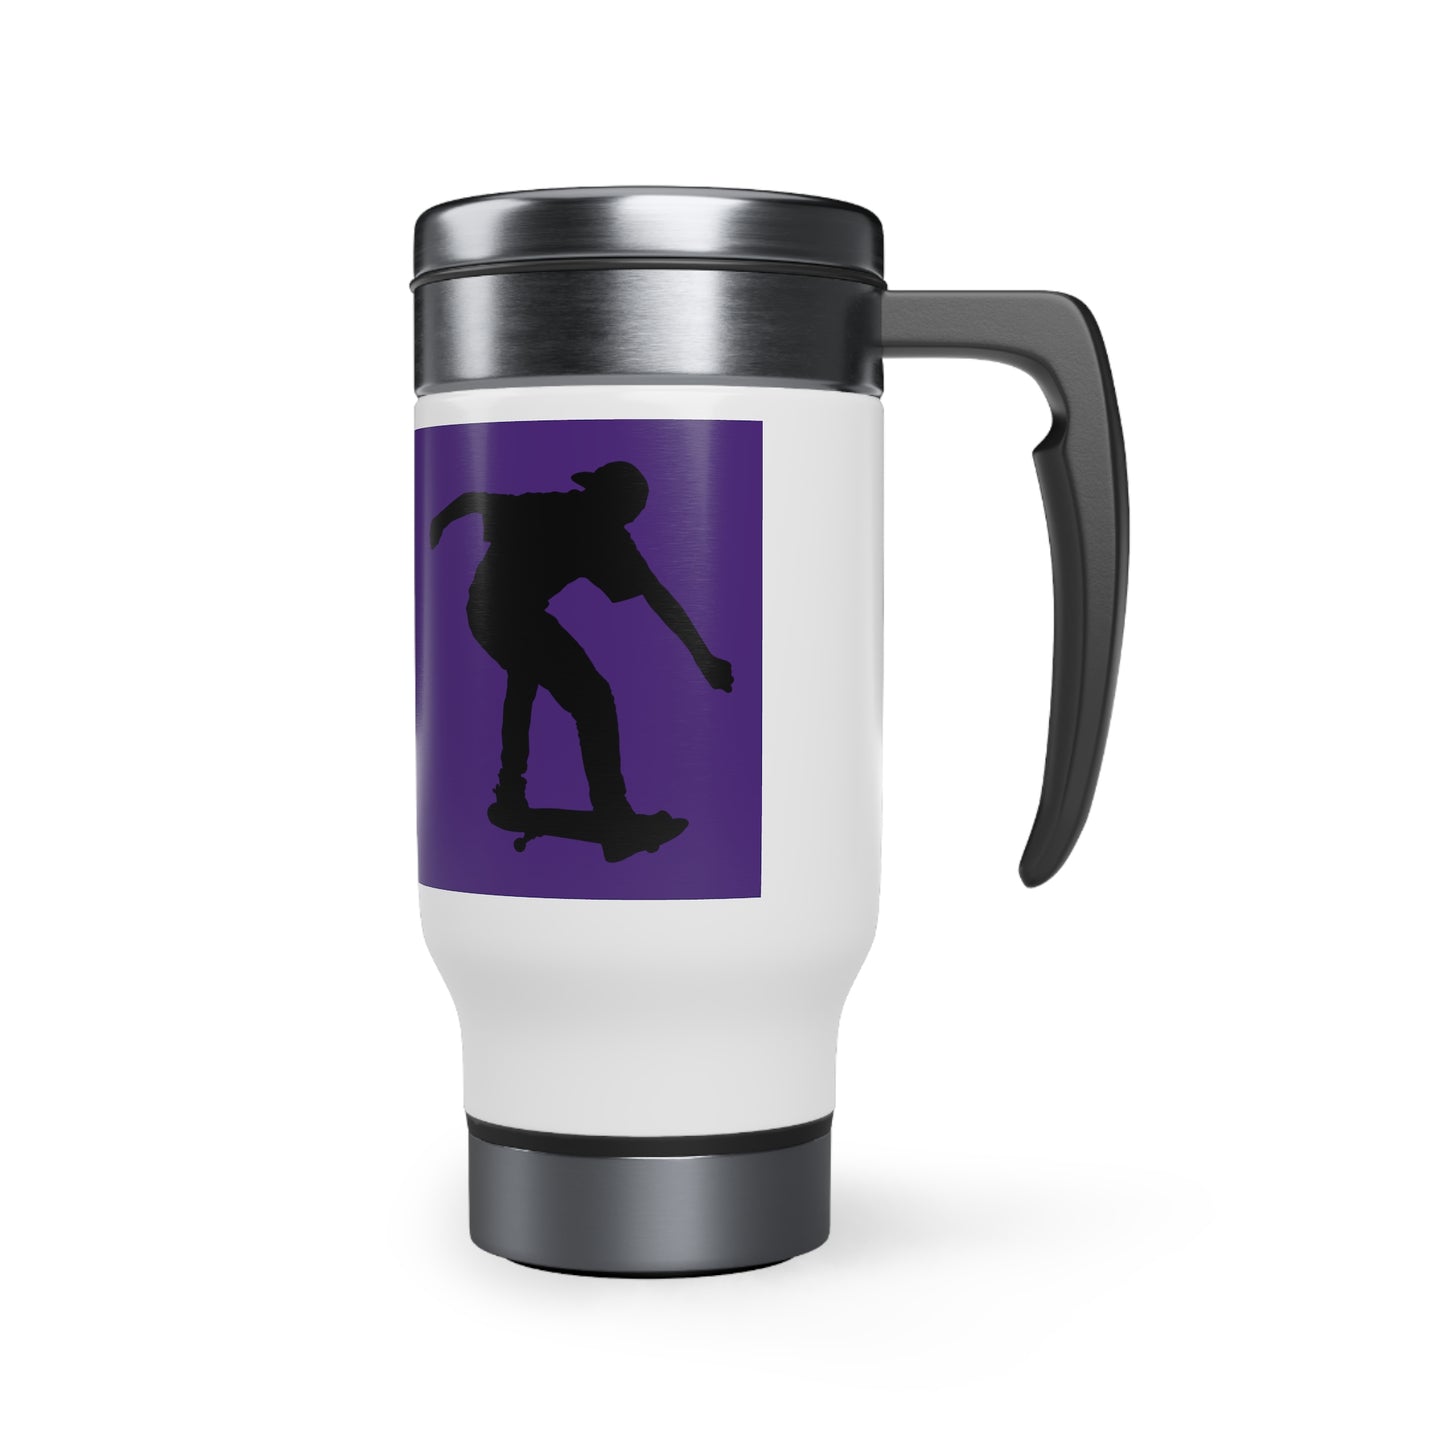 Stainless Steel Travel Mug with Handle, 14oz: Skateboarding Purple